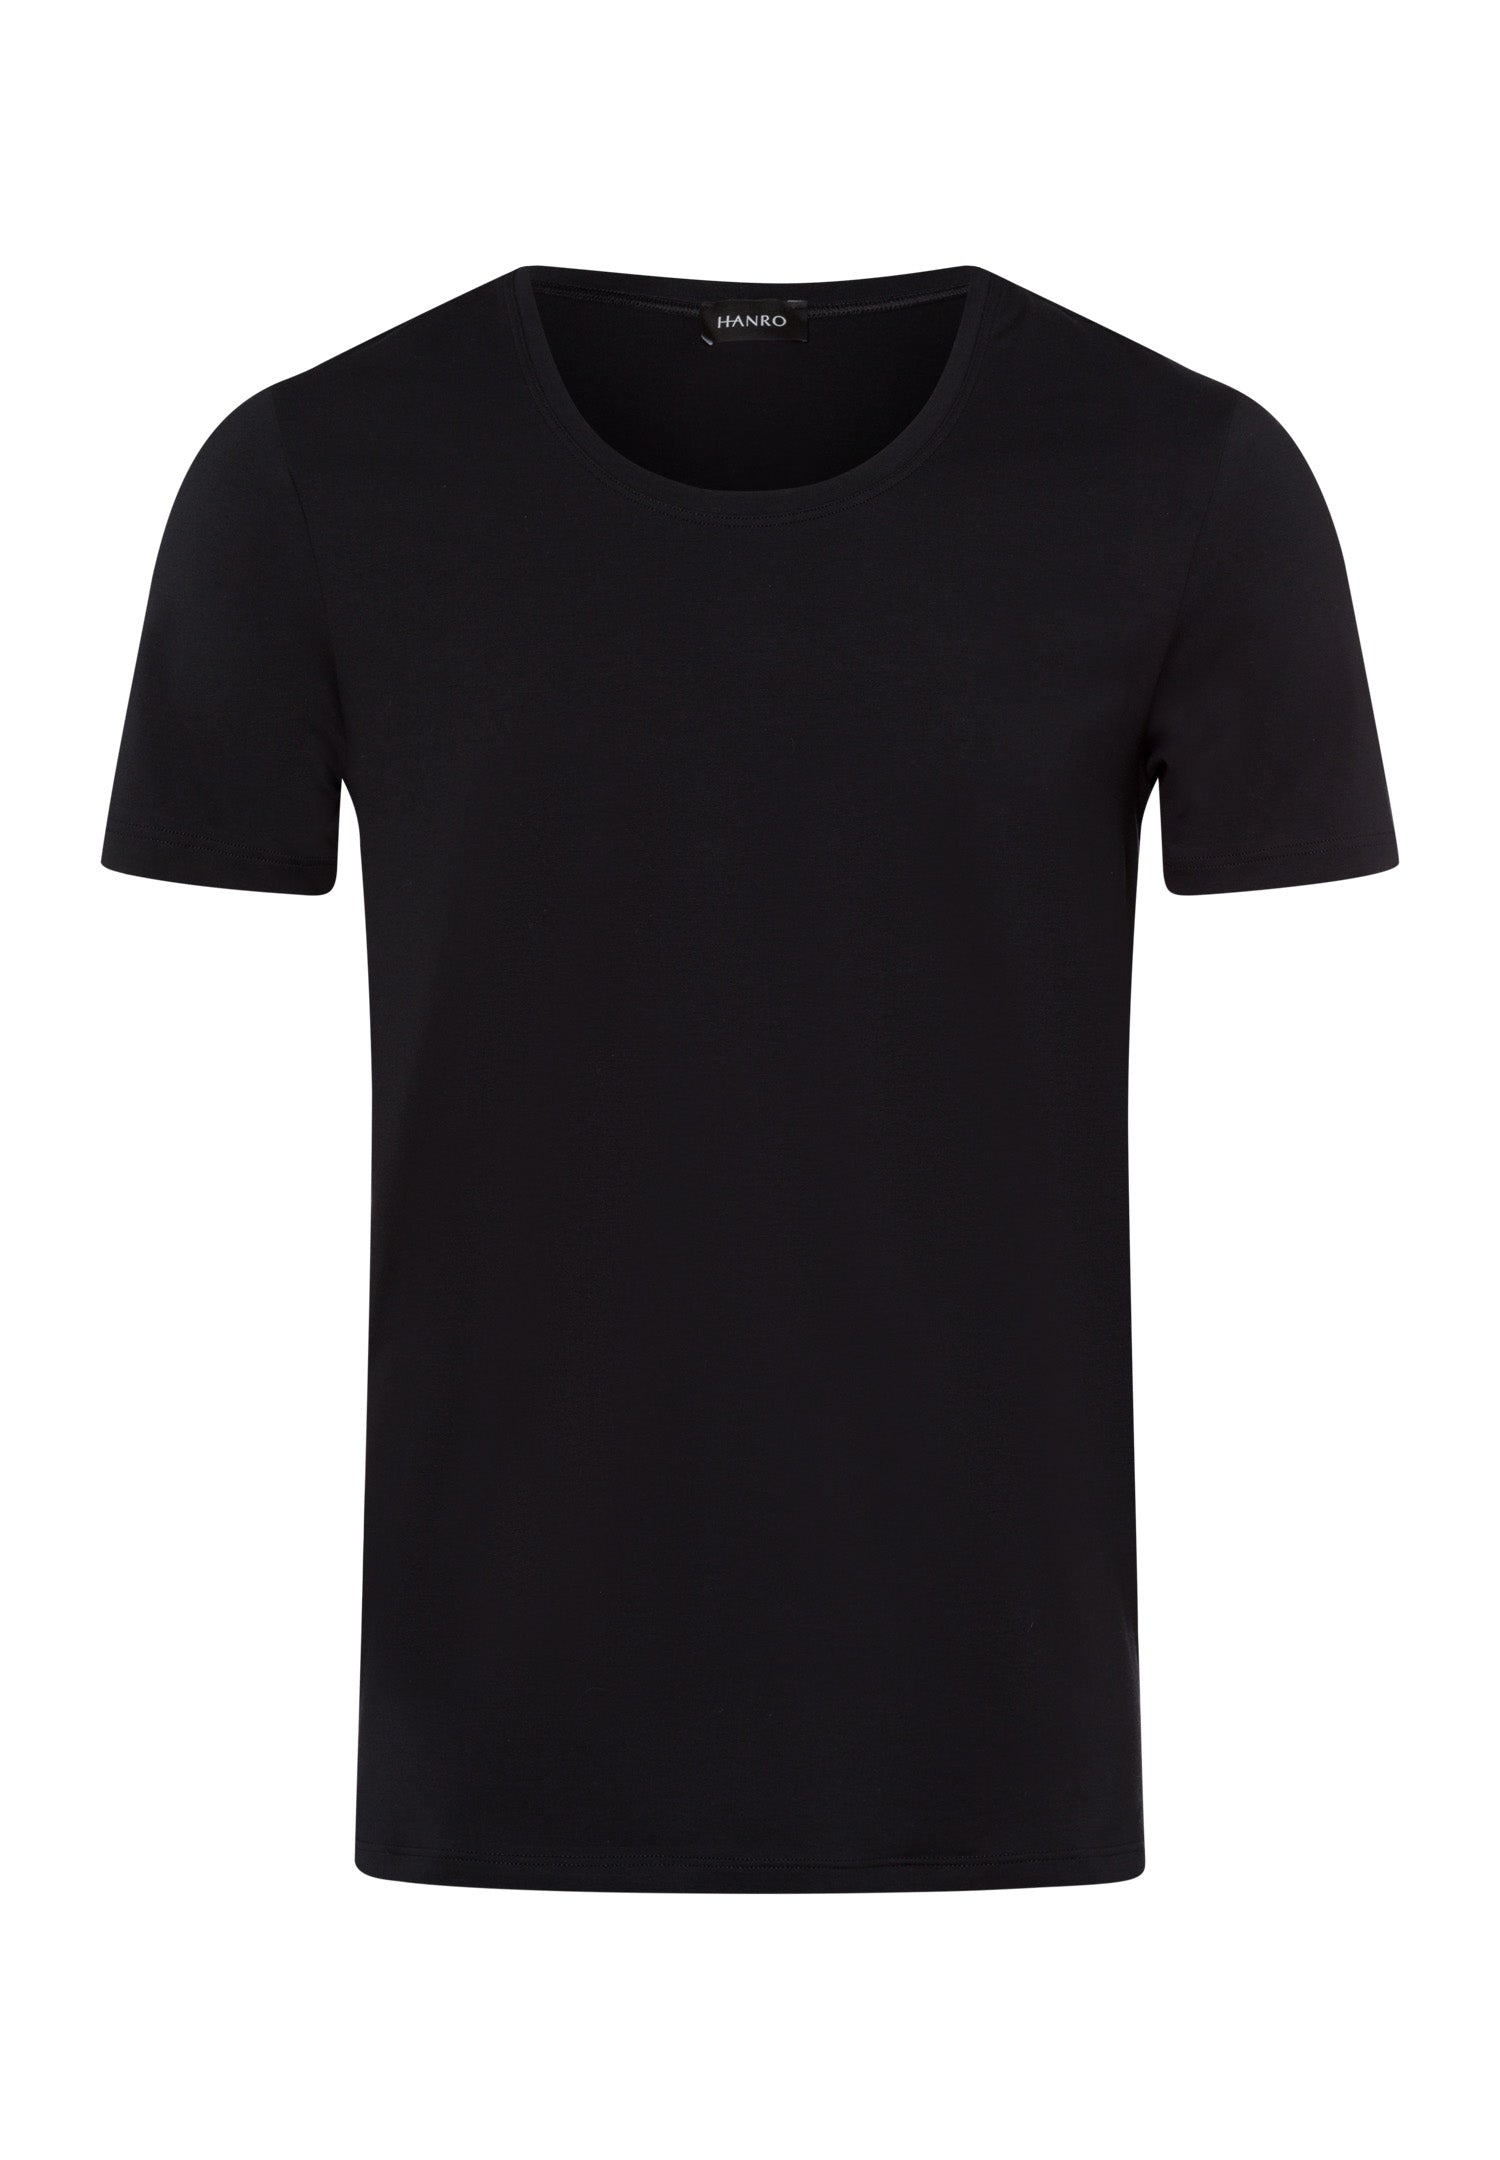 73088 Cotton Superior Crewneck T-Shirt - 199 Black